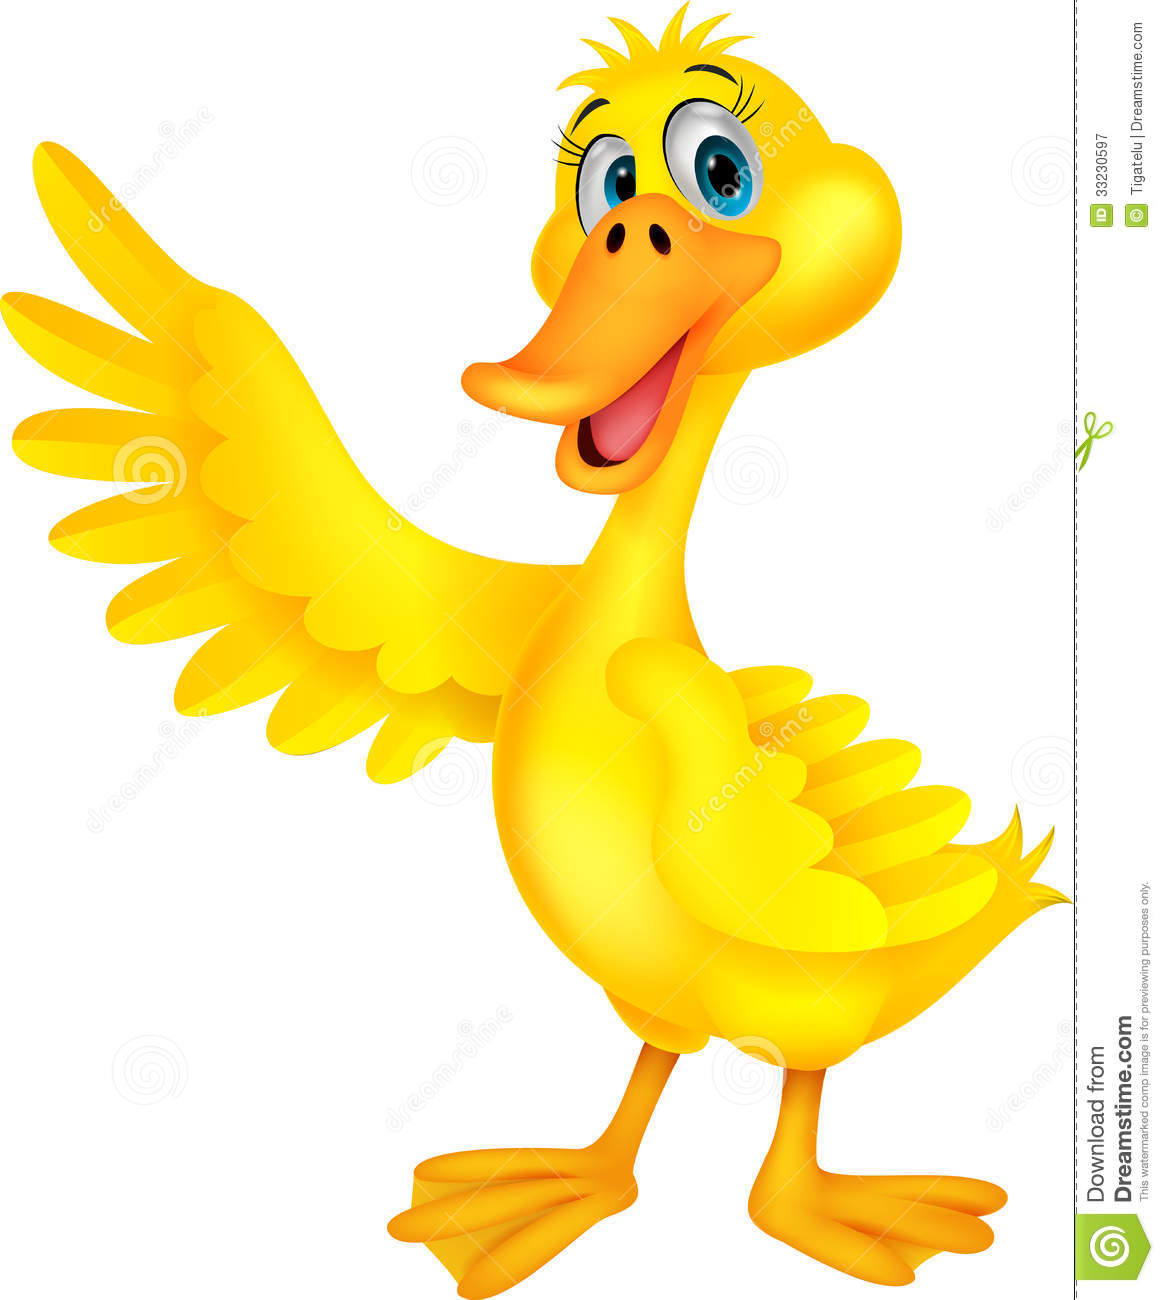 Ducks clipart royalty free. Cute download clip art